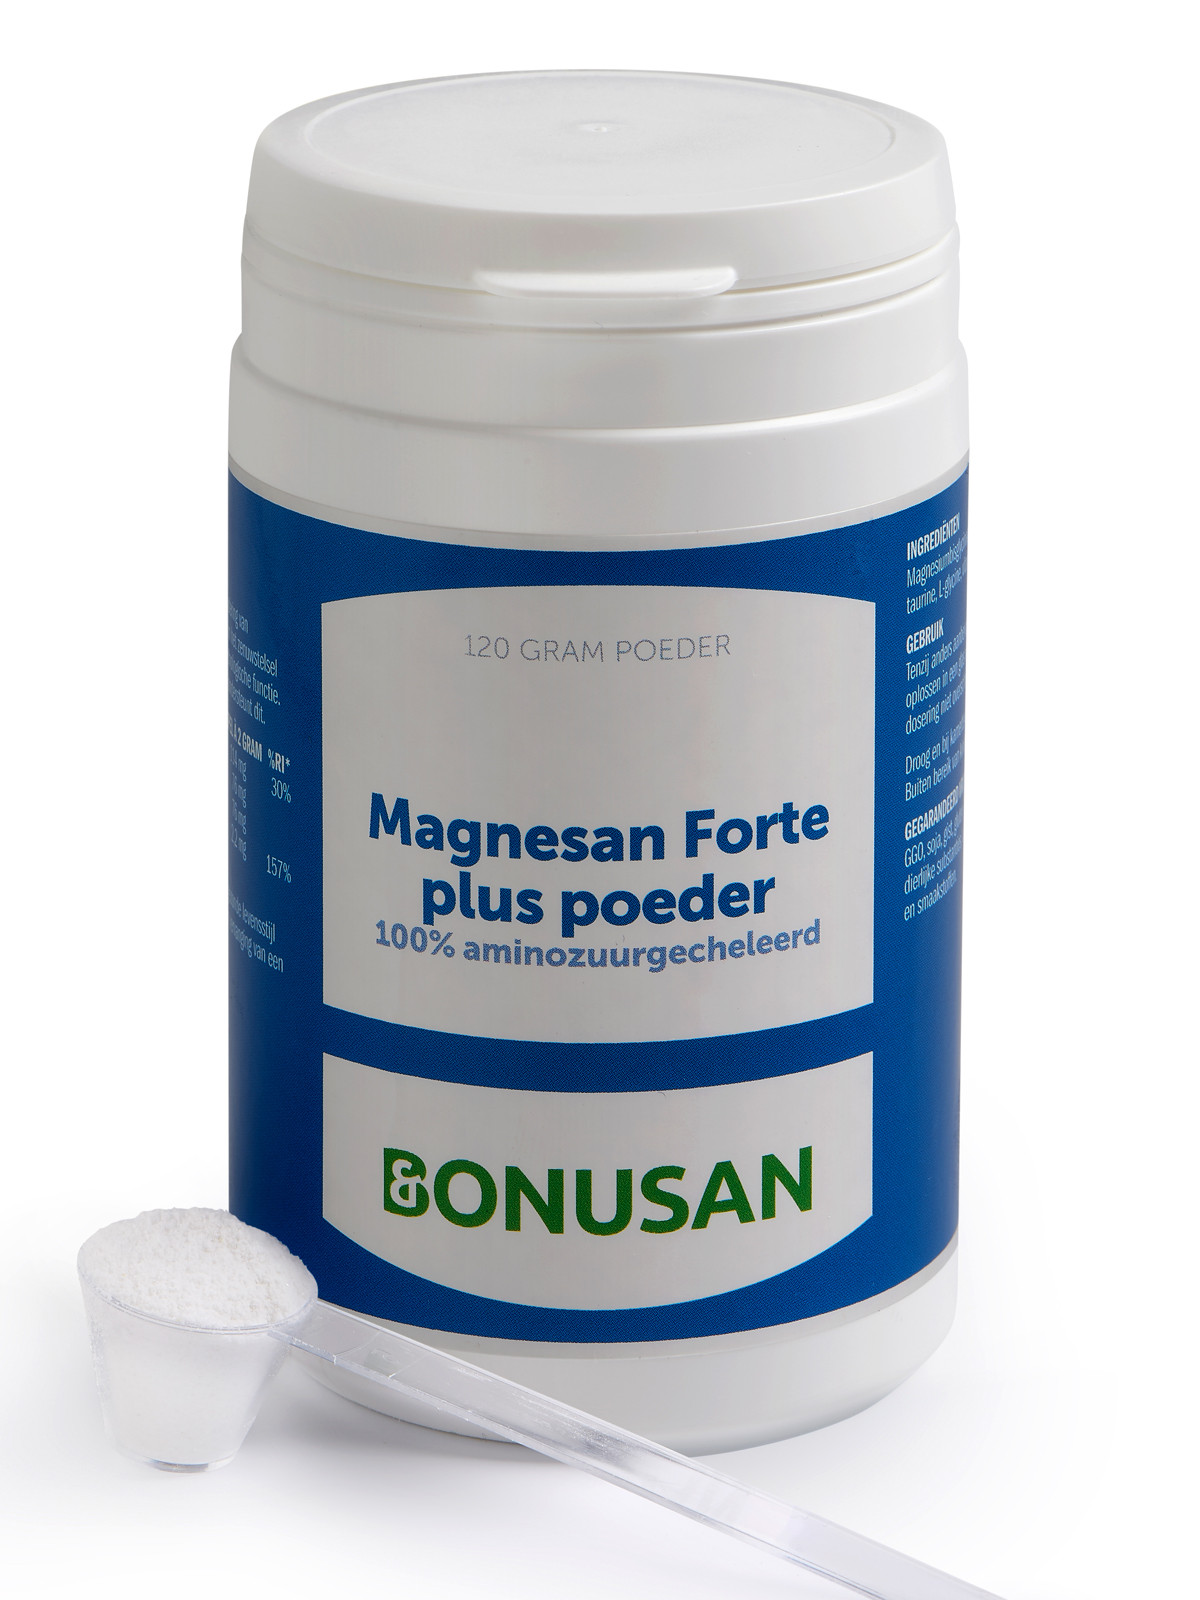 Bonusan - Magnesan Forte plus poeder - 120 gram